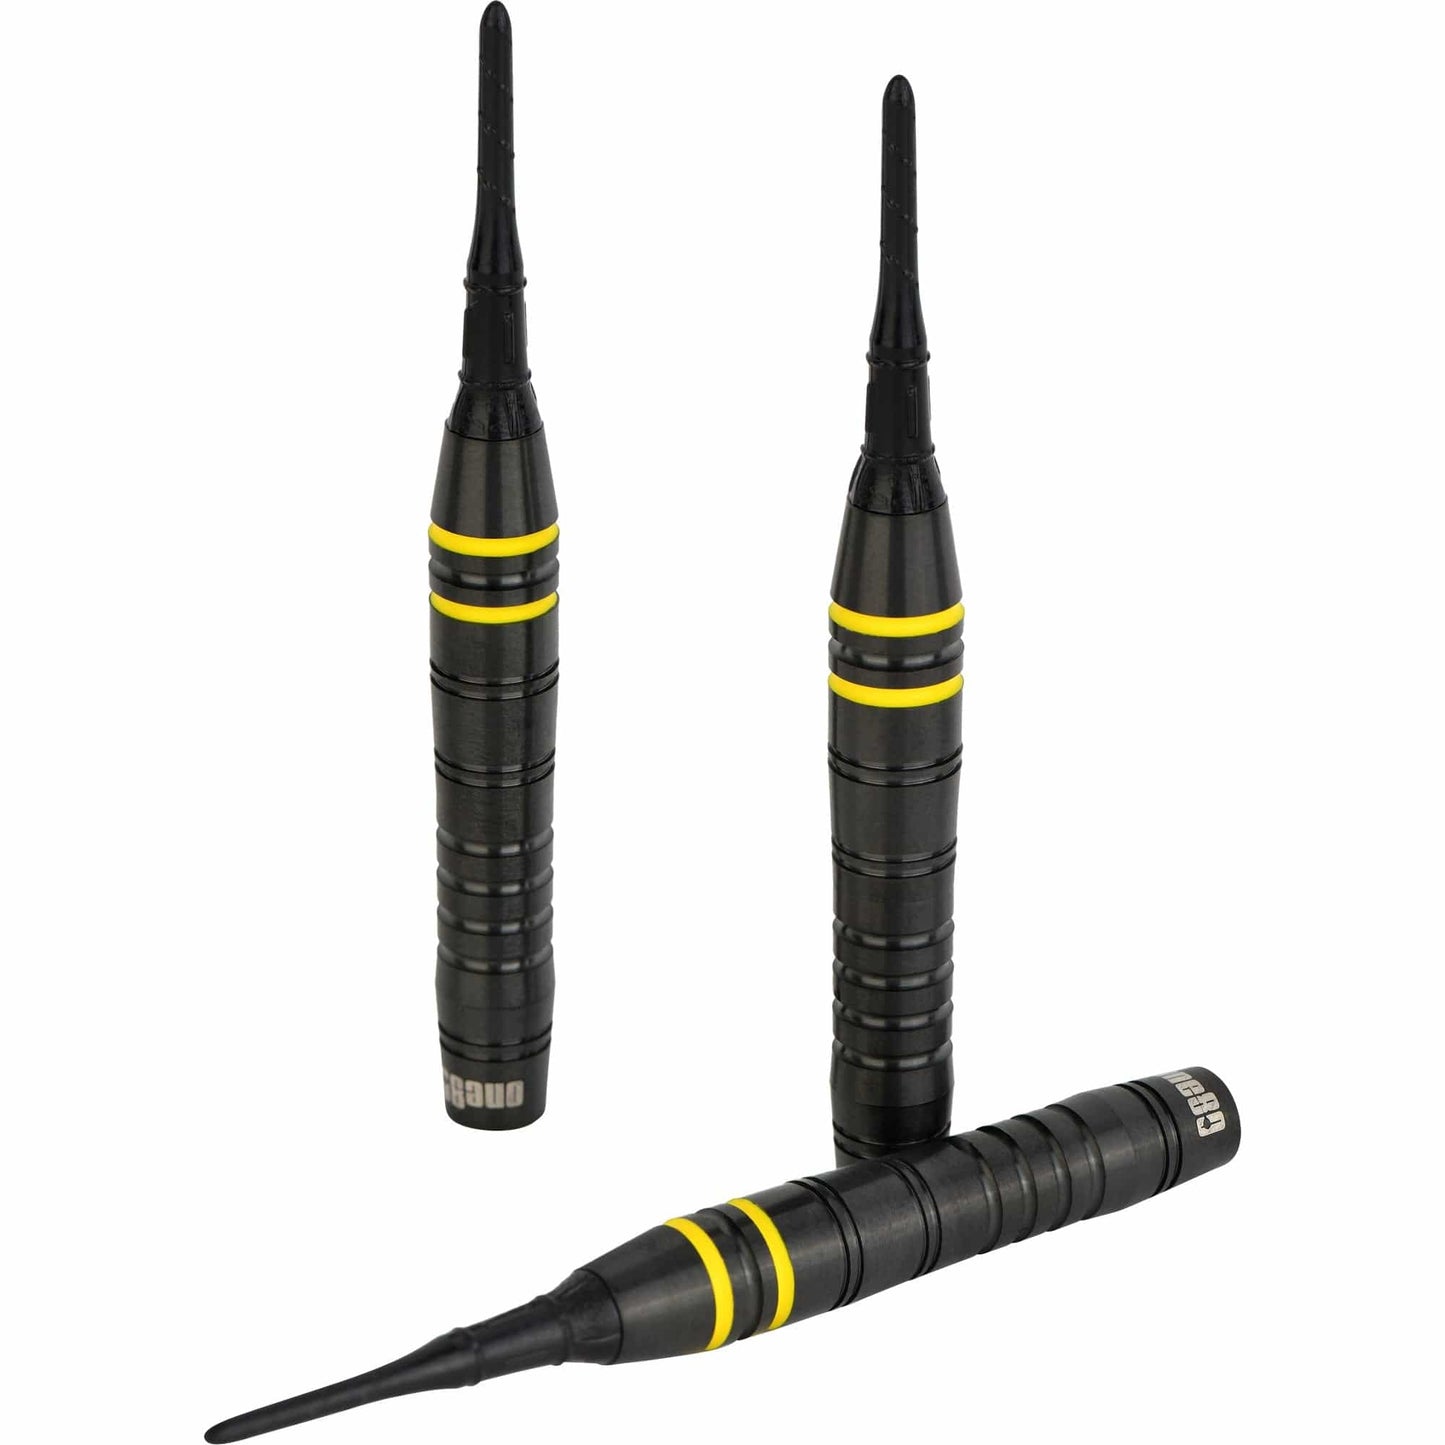 One80 Raise B Darts - Soft Tip - Black - Yellow Rings 17g